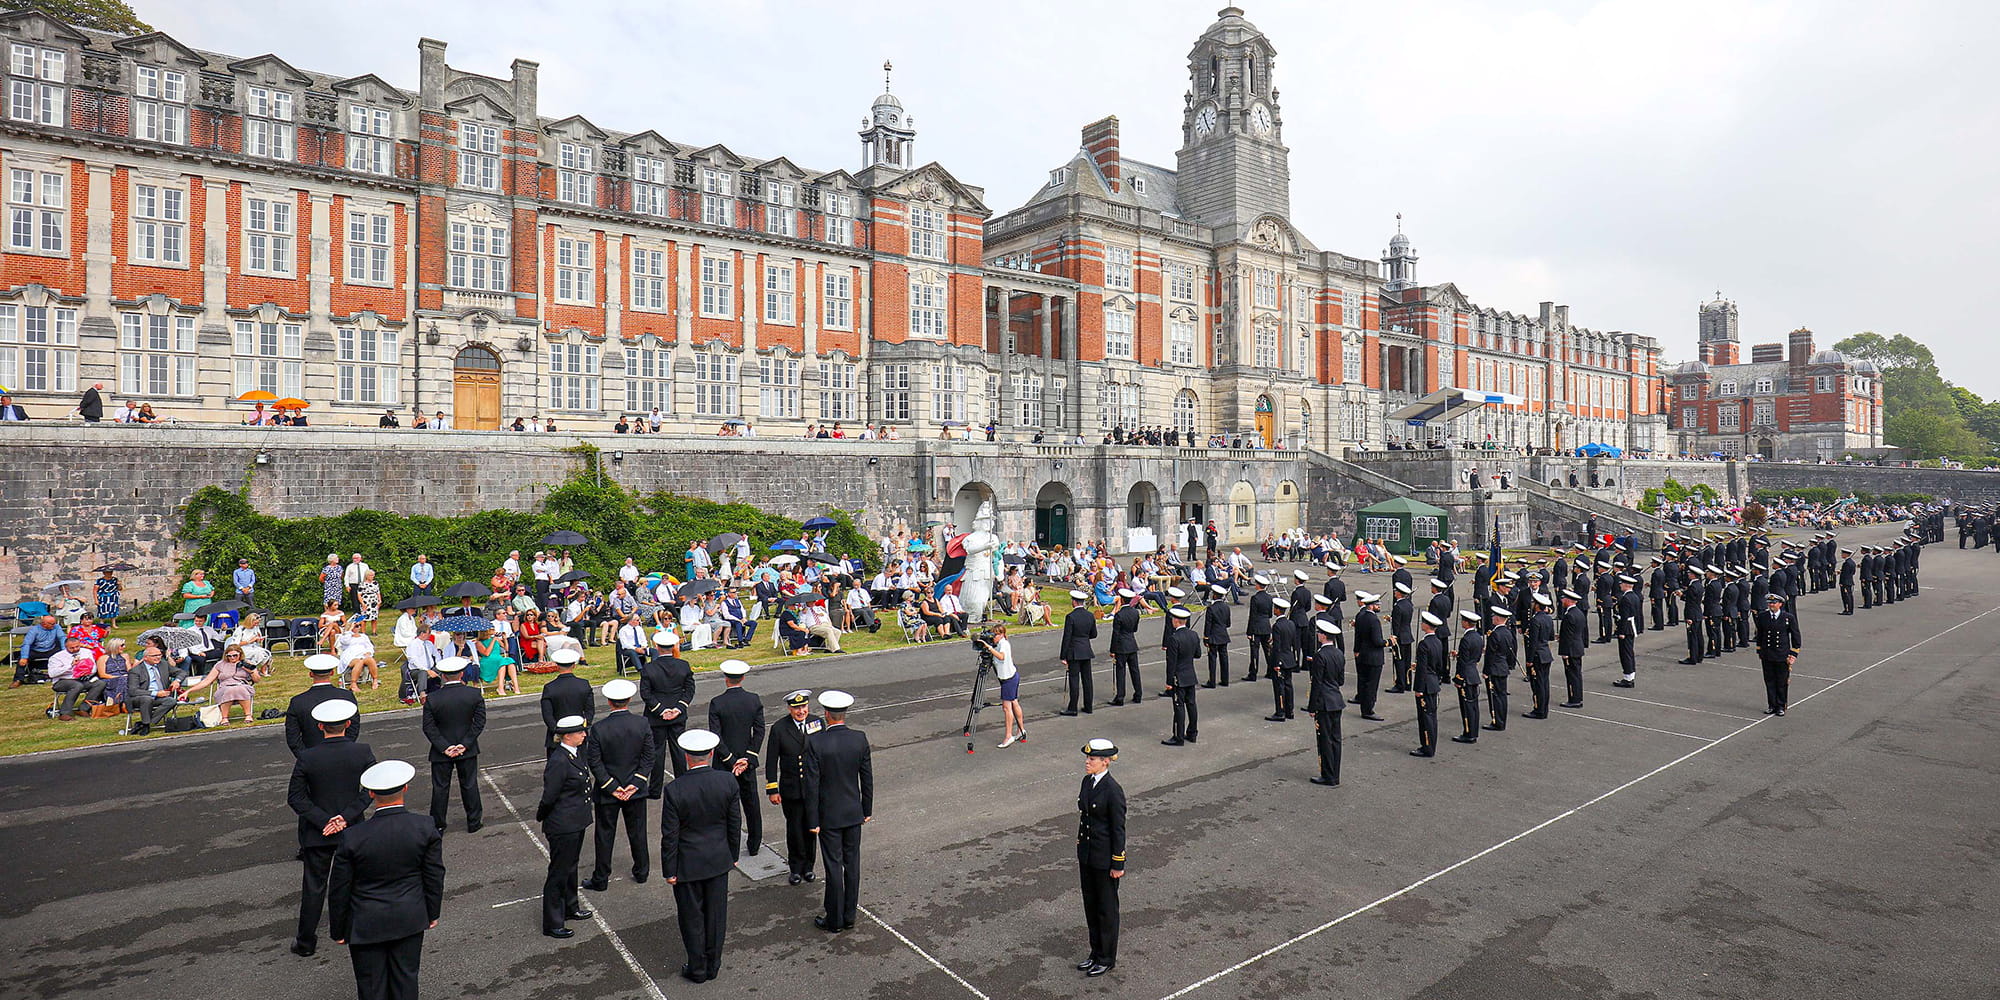 The parade ground of Britannia Royal Naval College in Dartmouth